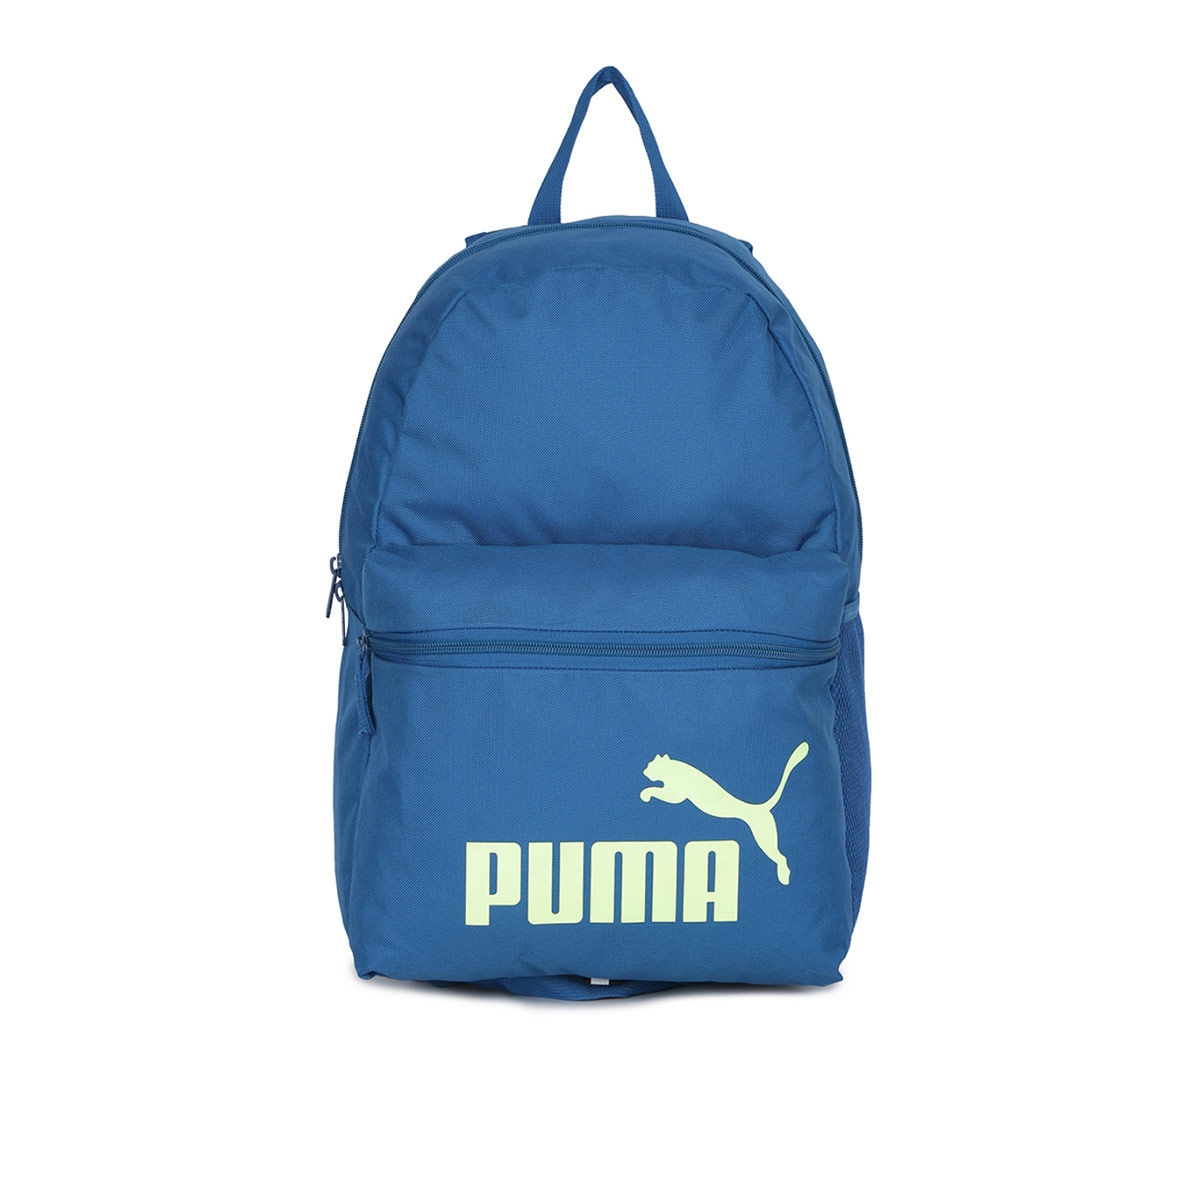 Puma PUMA PHASE BACKPACK Bleu - Livraison Gratuite